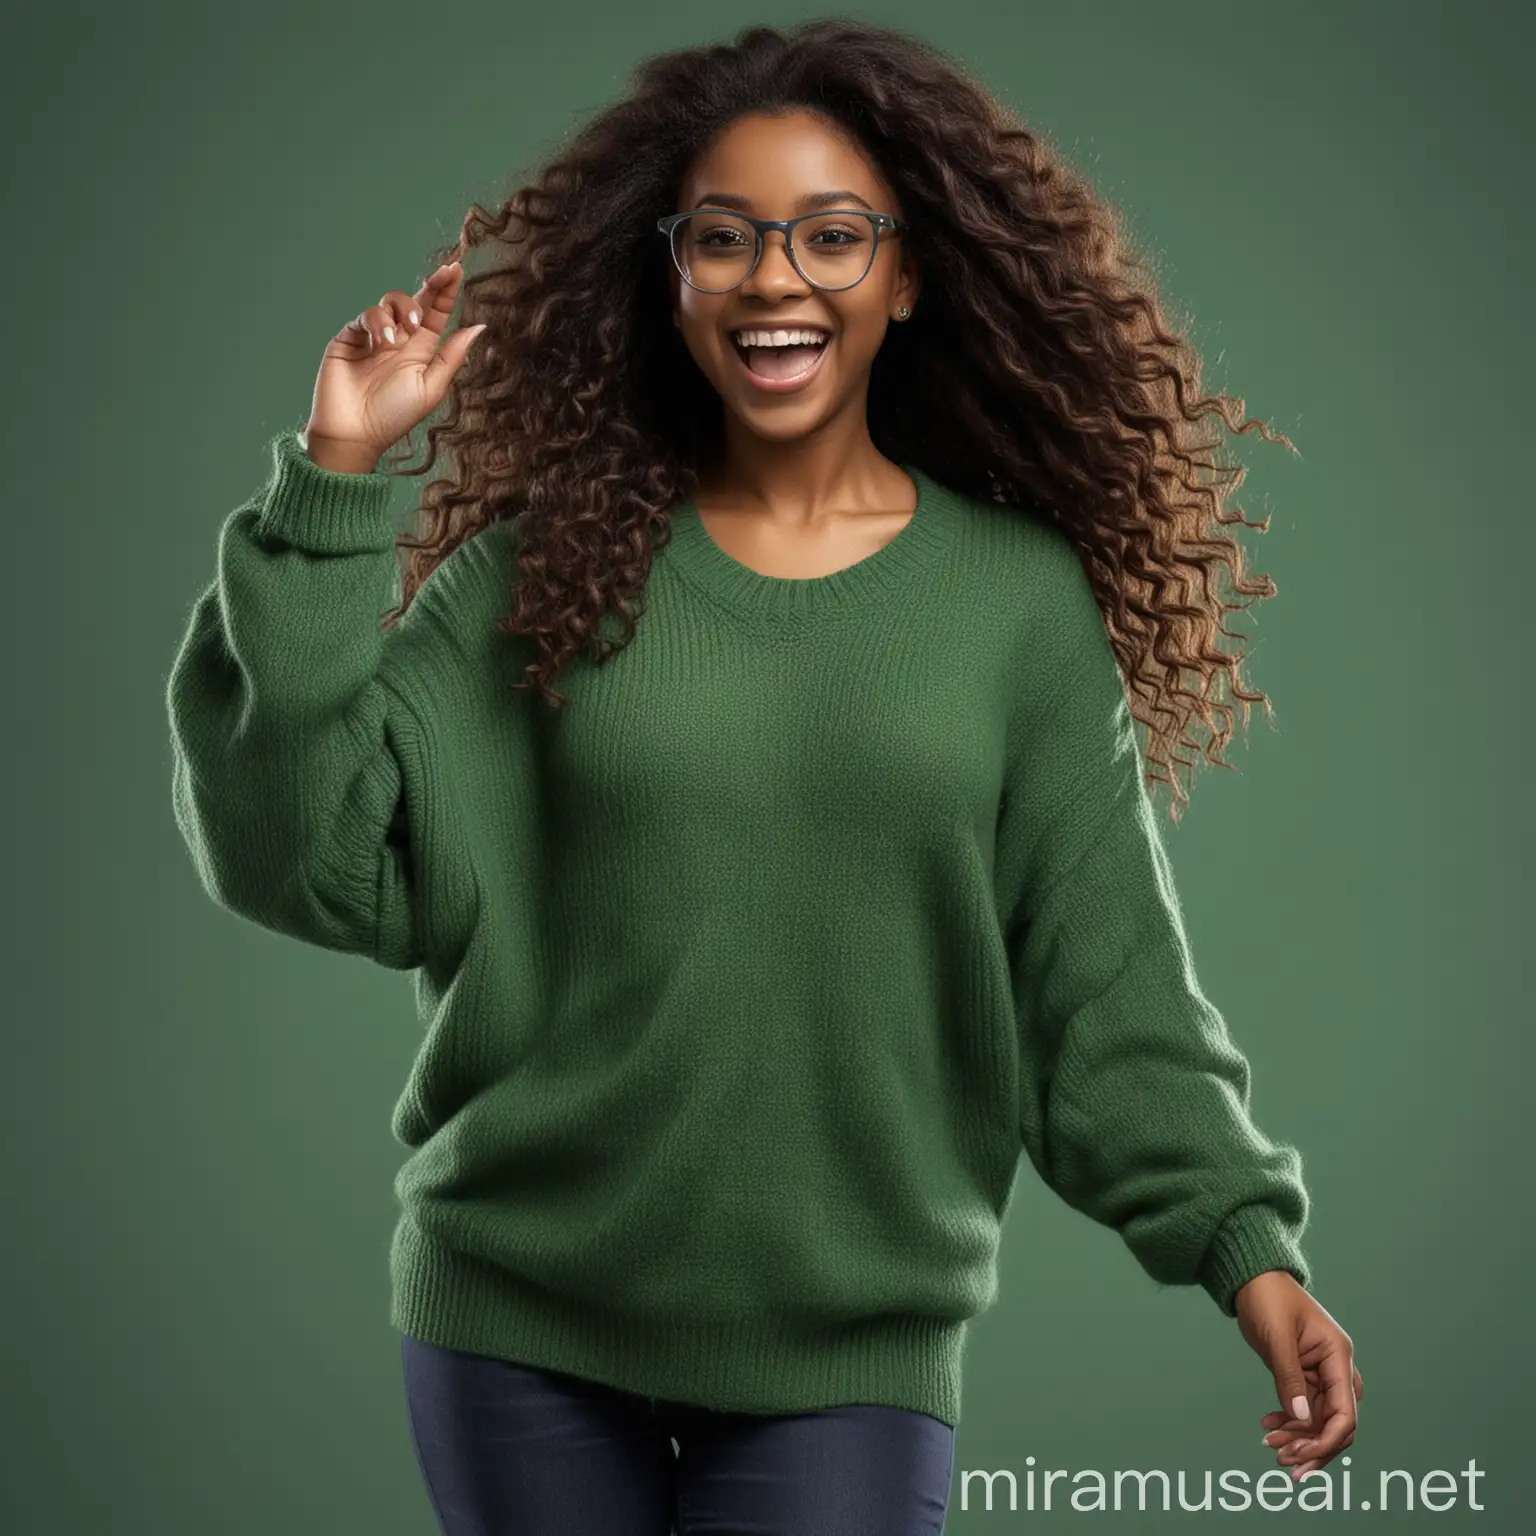 Joyful Black Woman Dancing in Stylish Green Sweater and Glasses